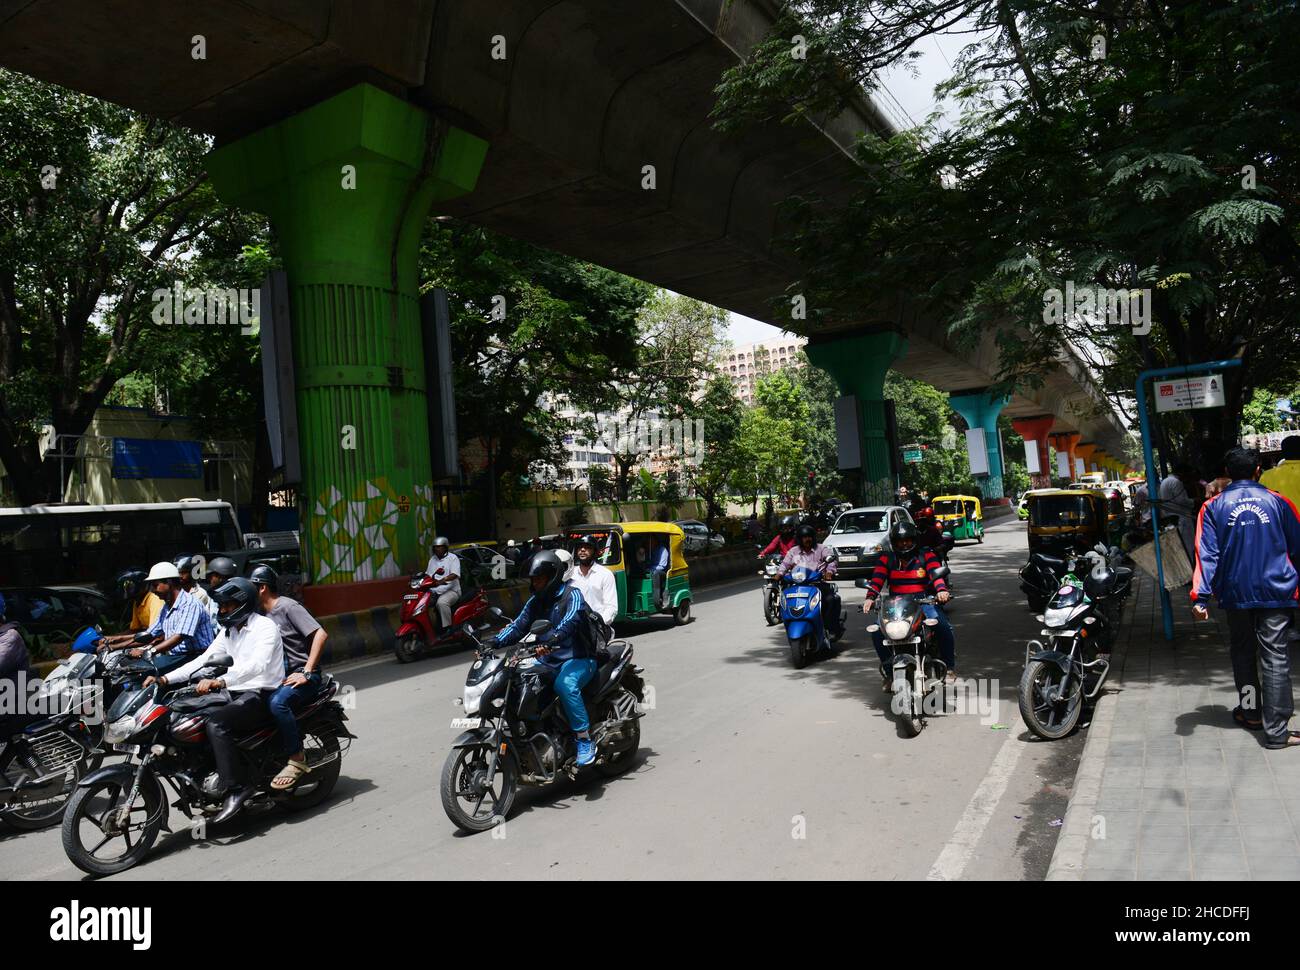 Traffico motociclistico sulla strada Mahatma Gandhi a Bangalore, India. Foto Stock